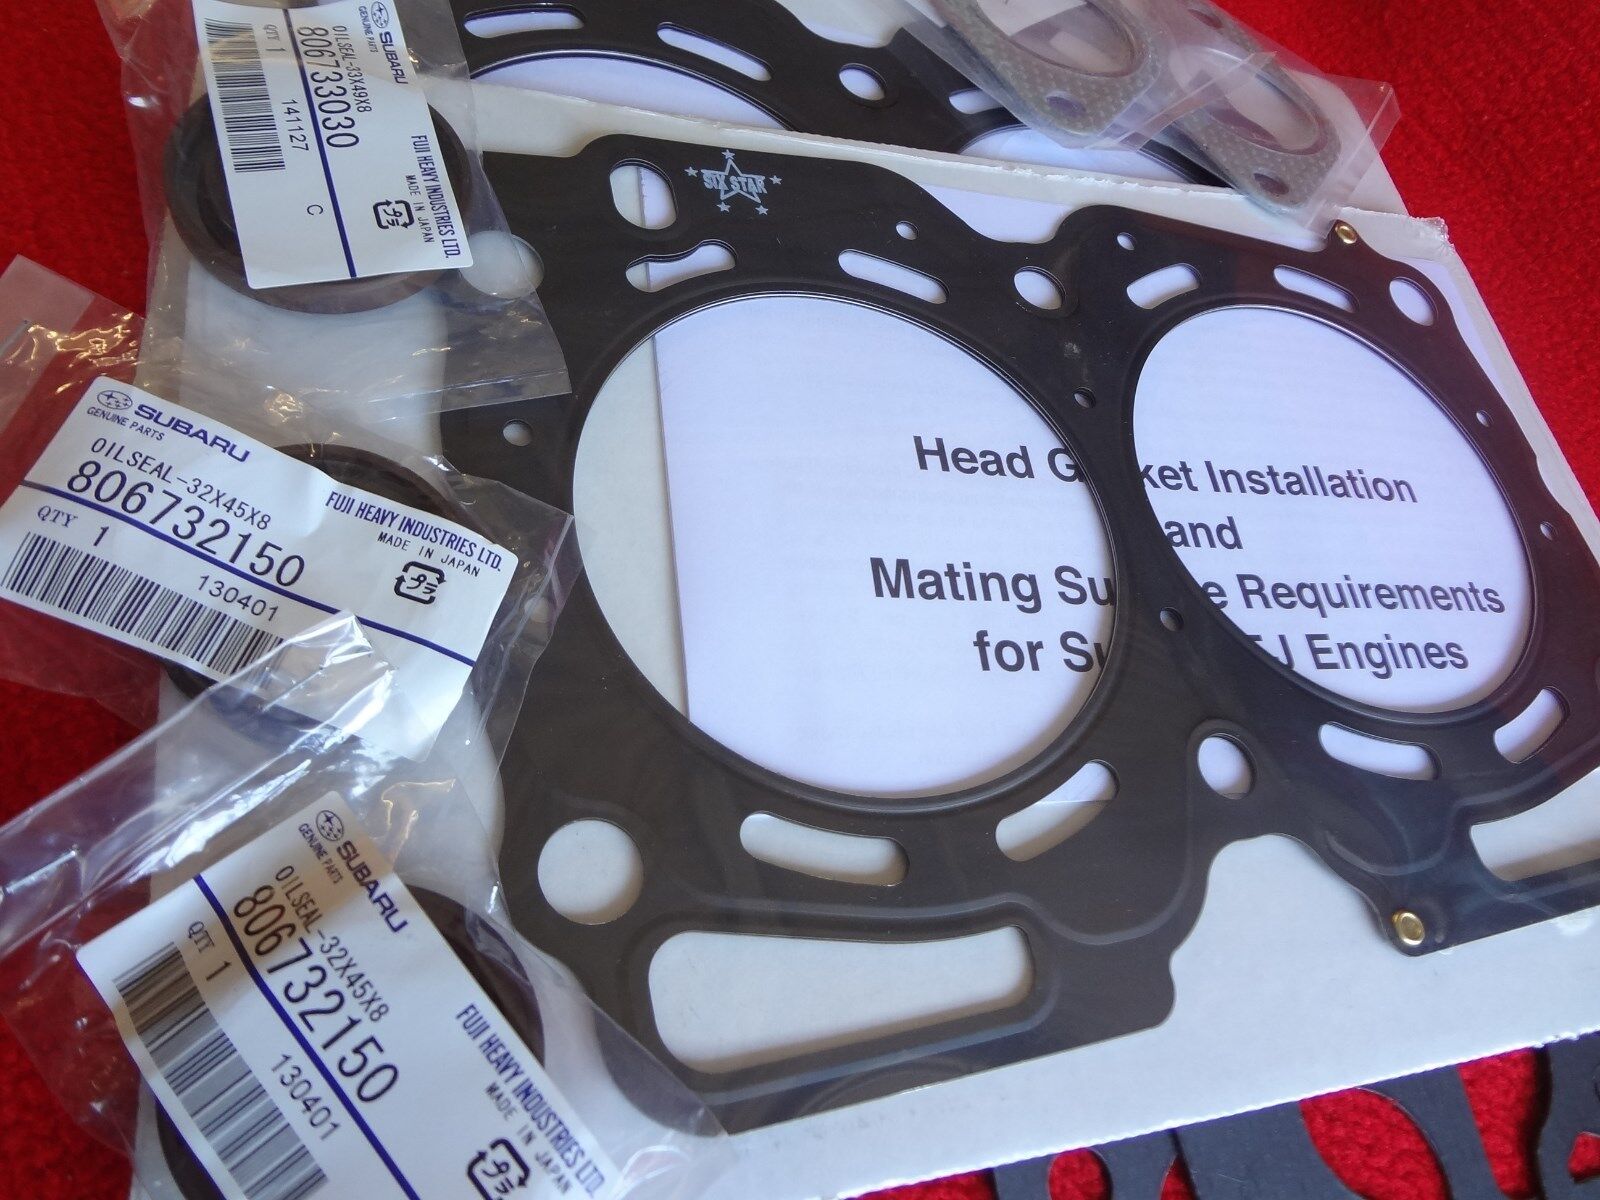 ❤️ Six Star Head Gasket Kit for Subaru 2.5 SOHC Impreza Forester Outback Legacy